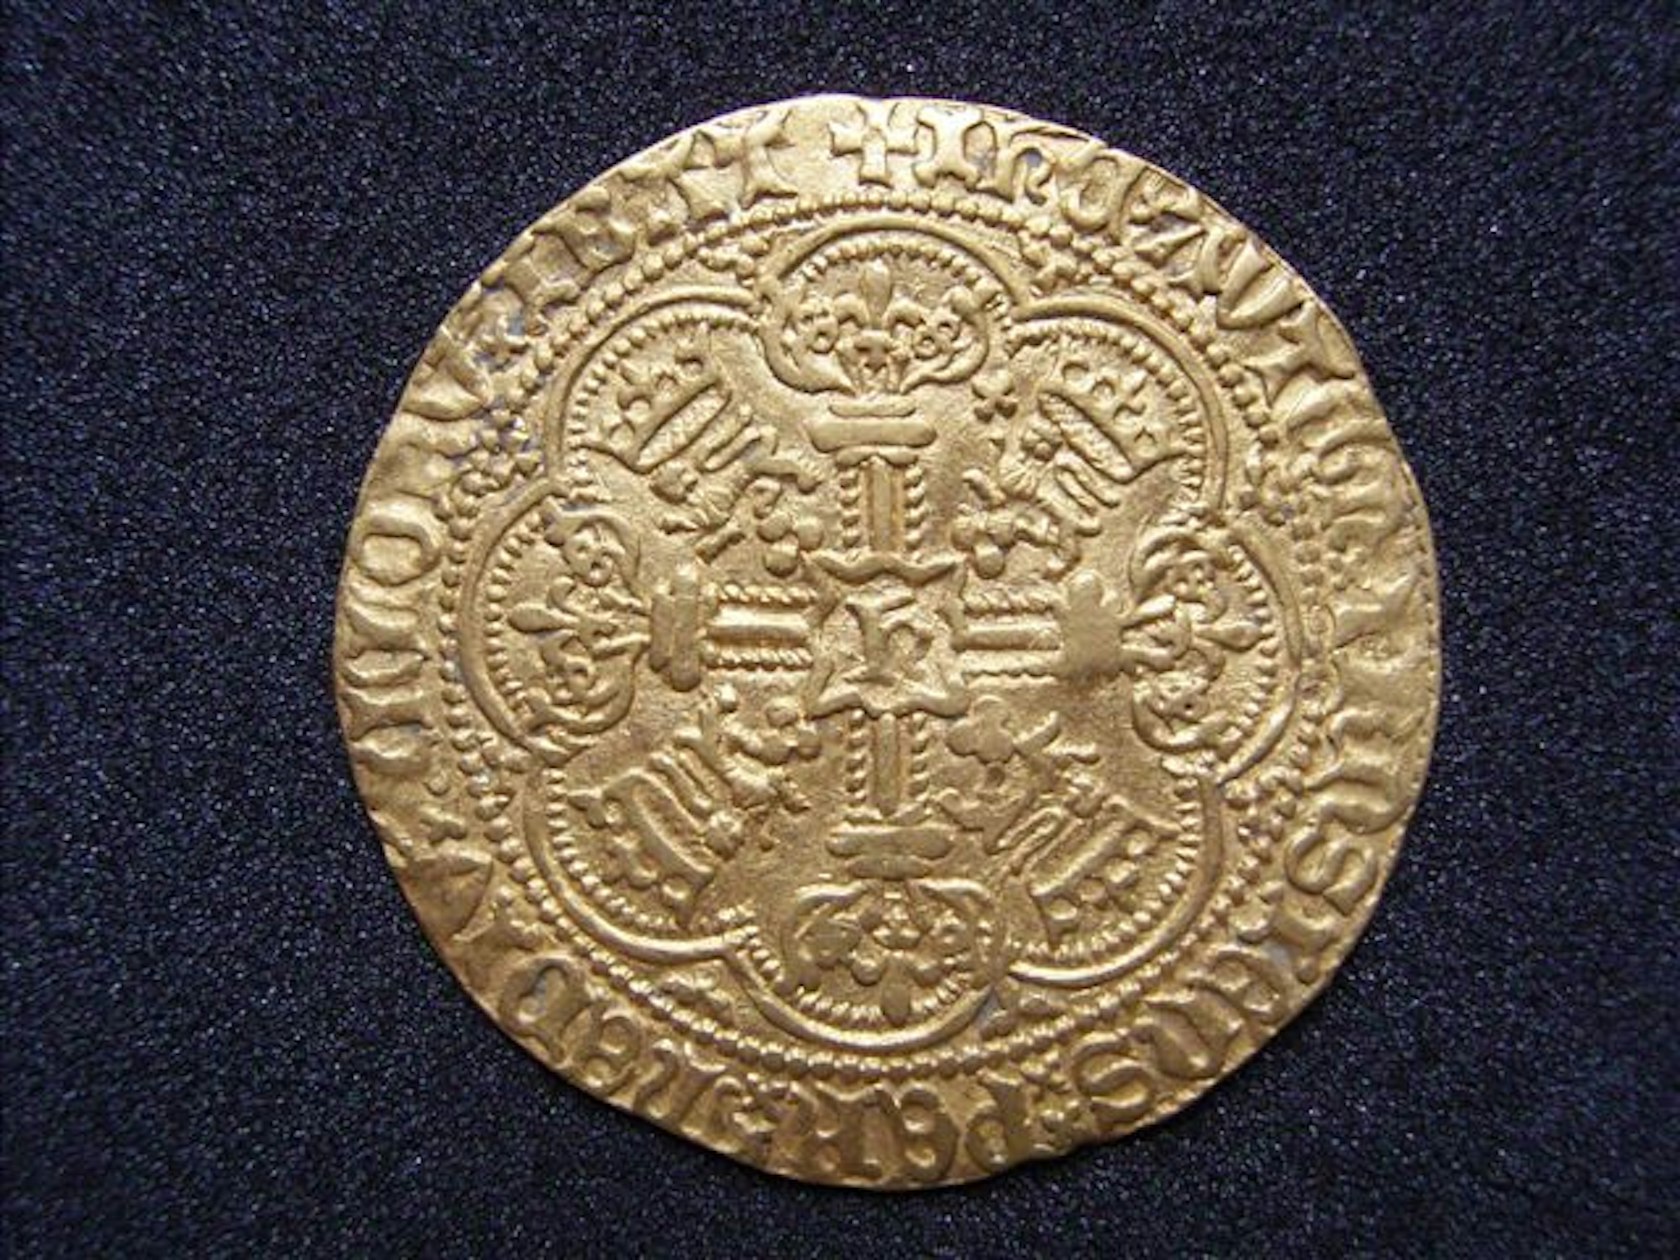 Codnor gold coin 1